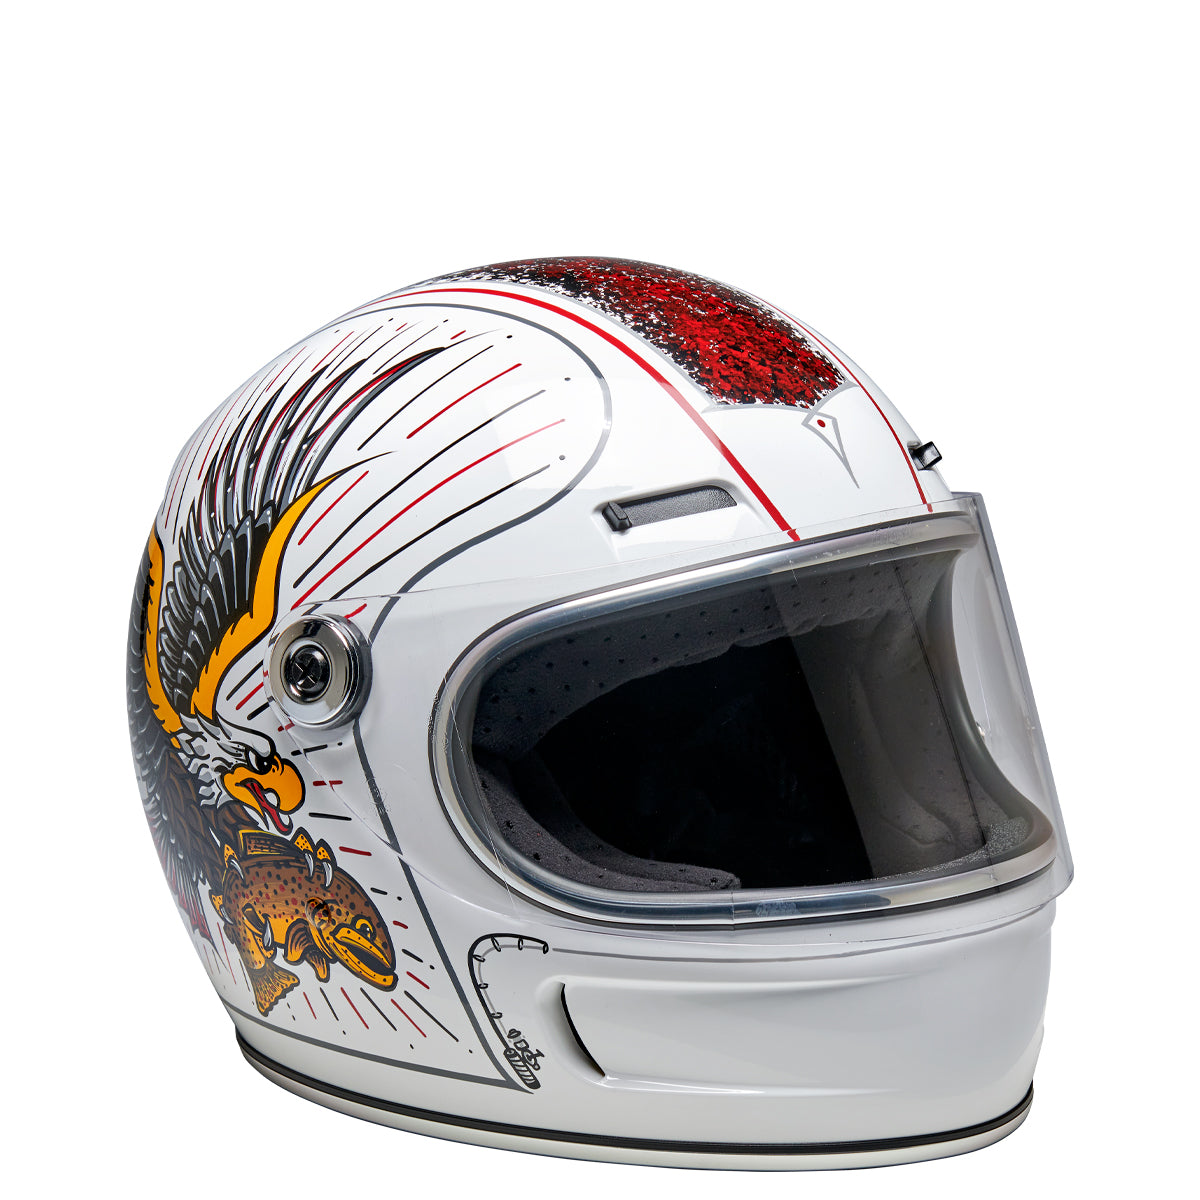 Custom Painted Gringo SV Helmet by Jeremy Pedersen